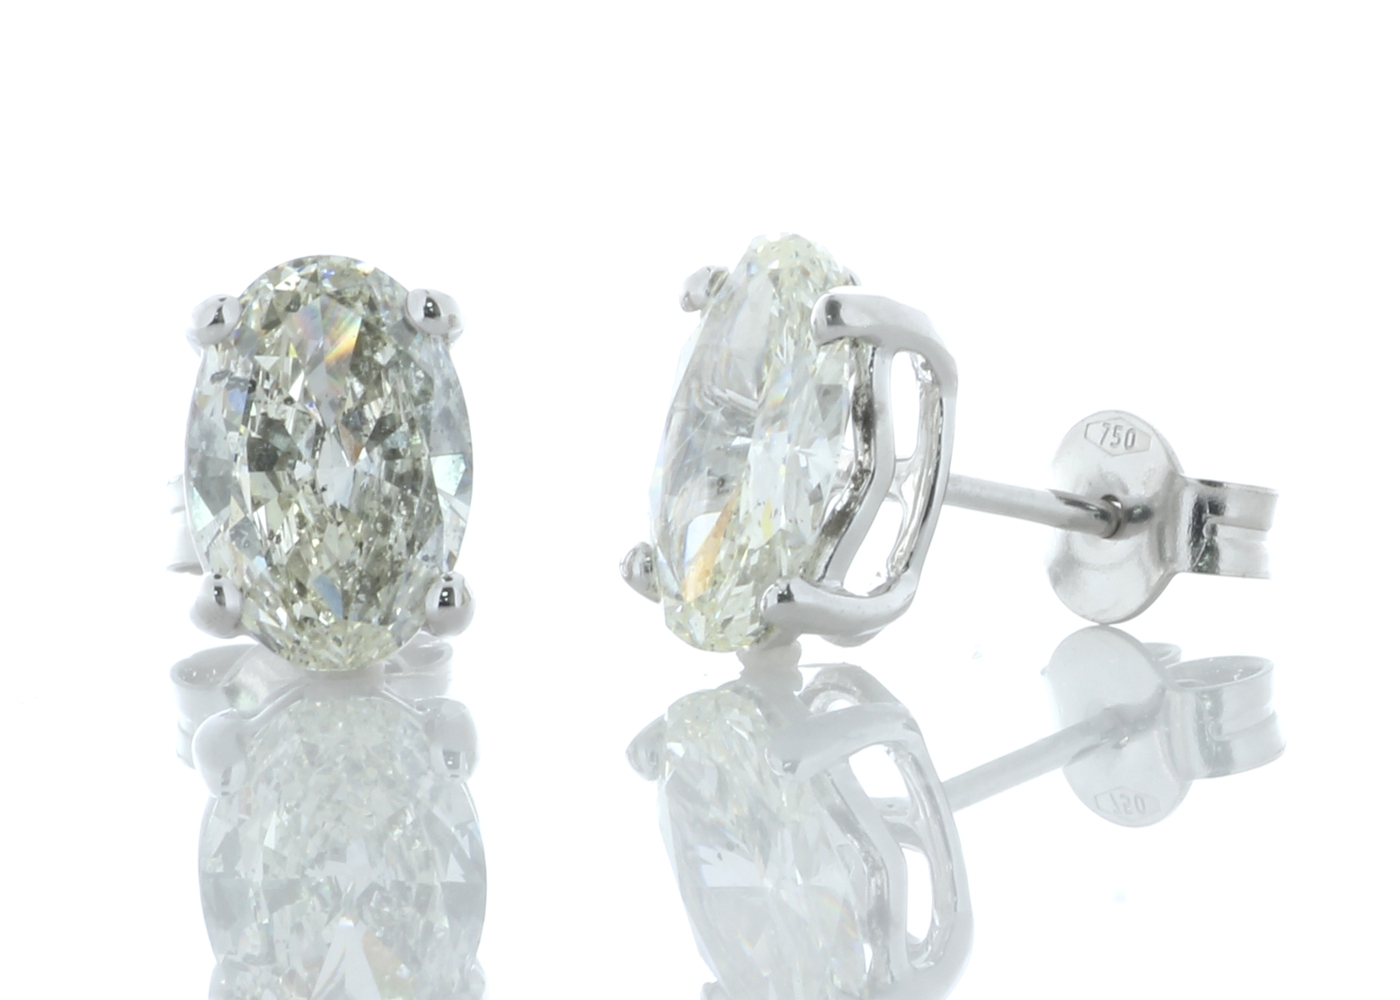 18ct White Gold Single Stone Oval Cut Diamond Earring 2.55 Carats - Image 2 of 4